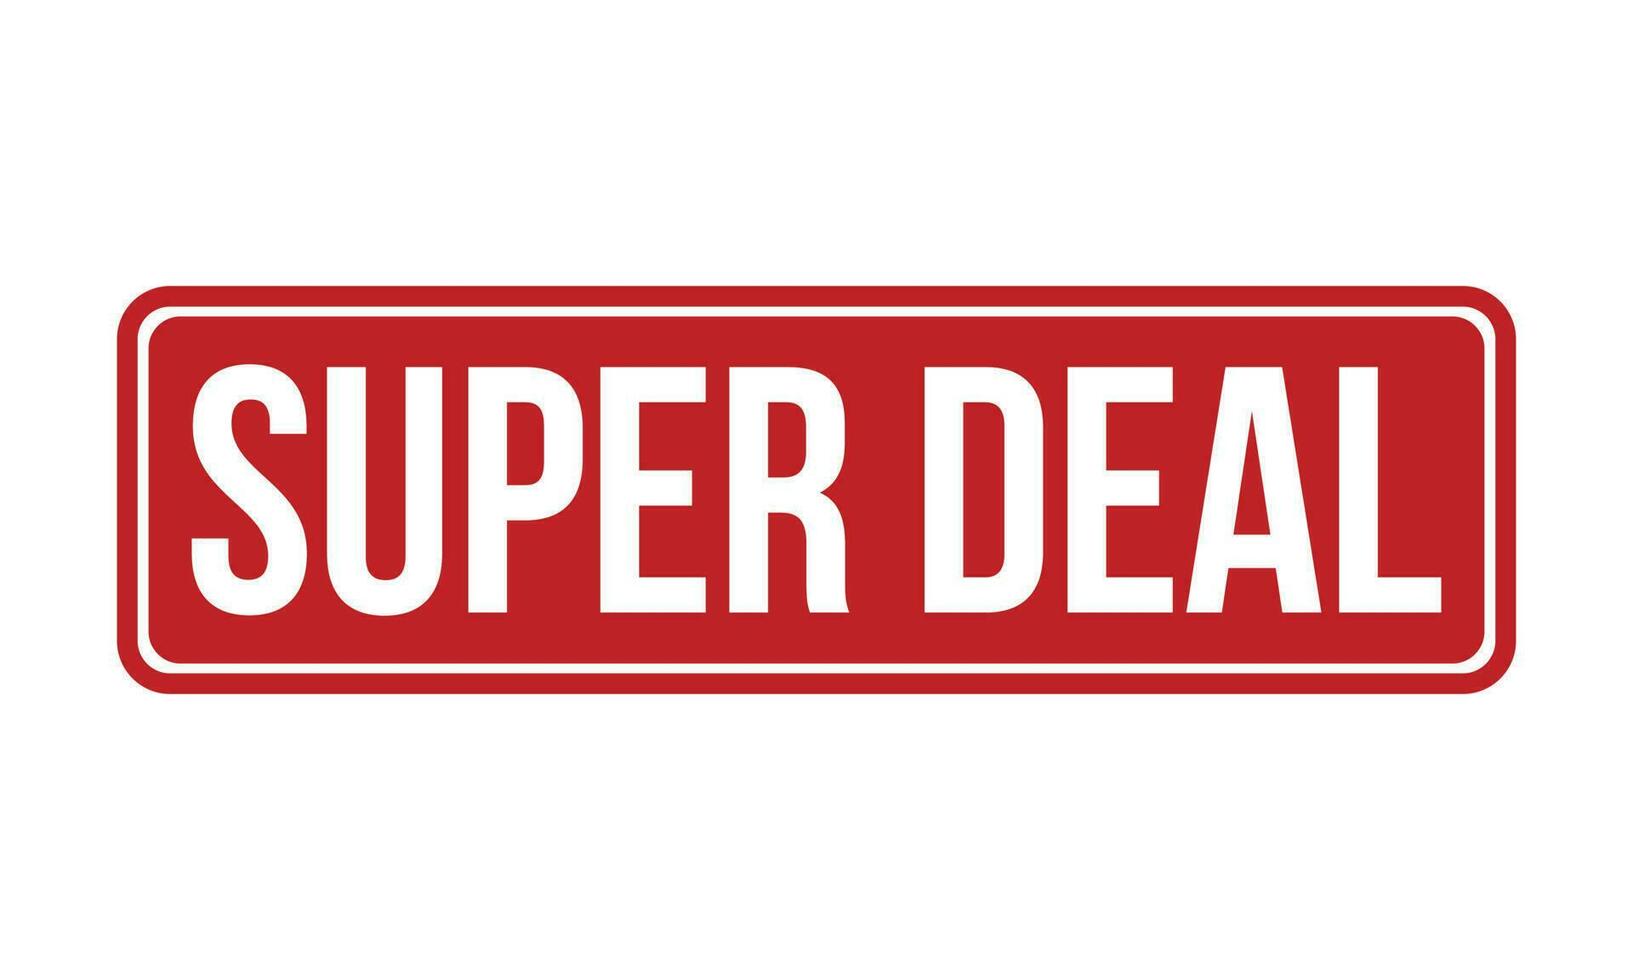 Super Deal Rubber Stamp Seal Vector